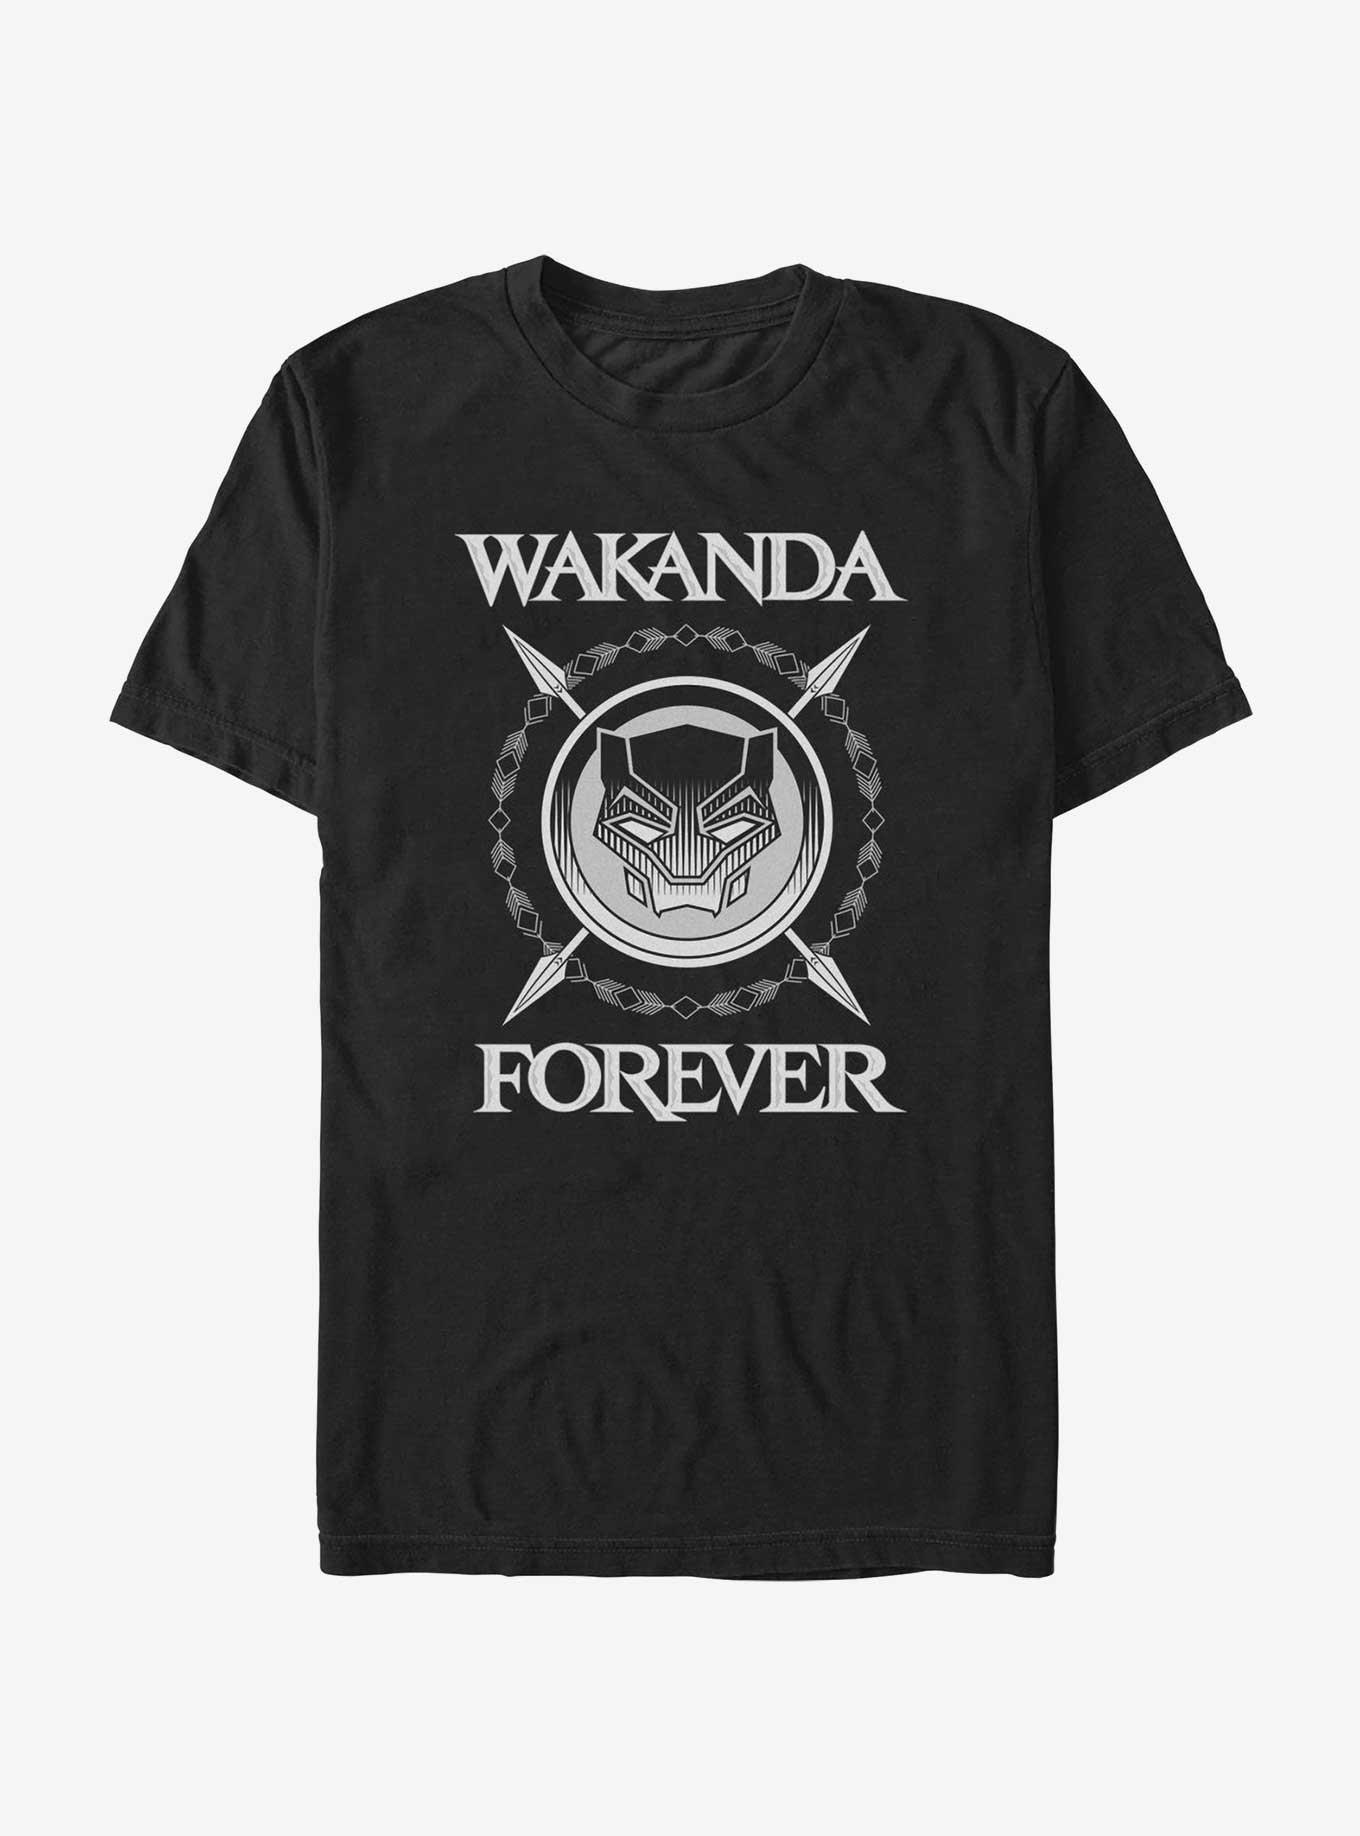 Marvel Black Panther: Wakanda Forever Crossed Spears Emblem Extra Soft T-Shirt, BLACK, hi-res